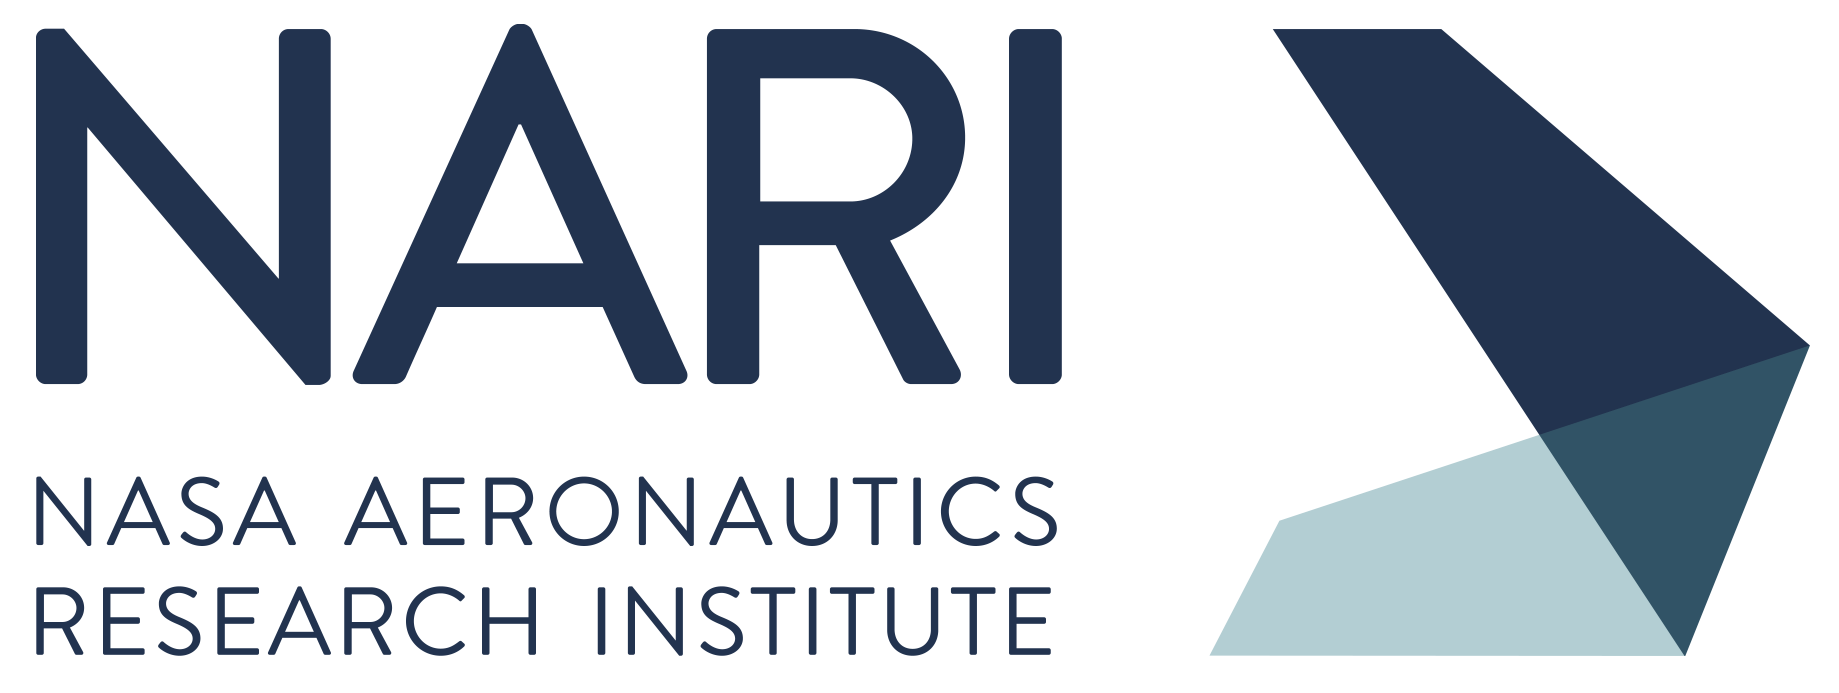 NASA Aeronautics Research Institute (NARI) Logo